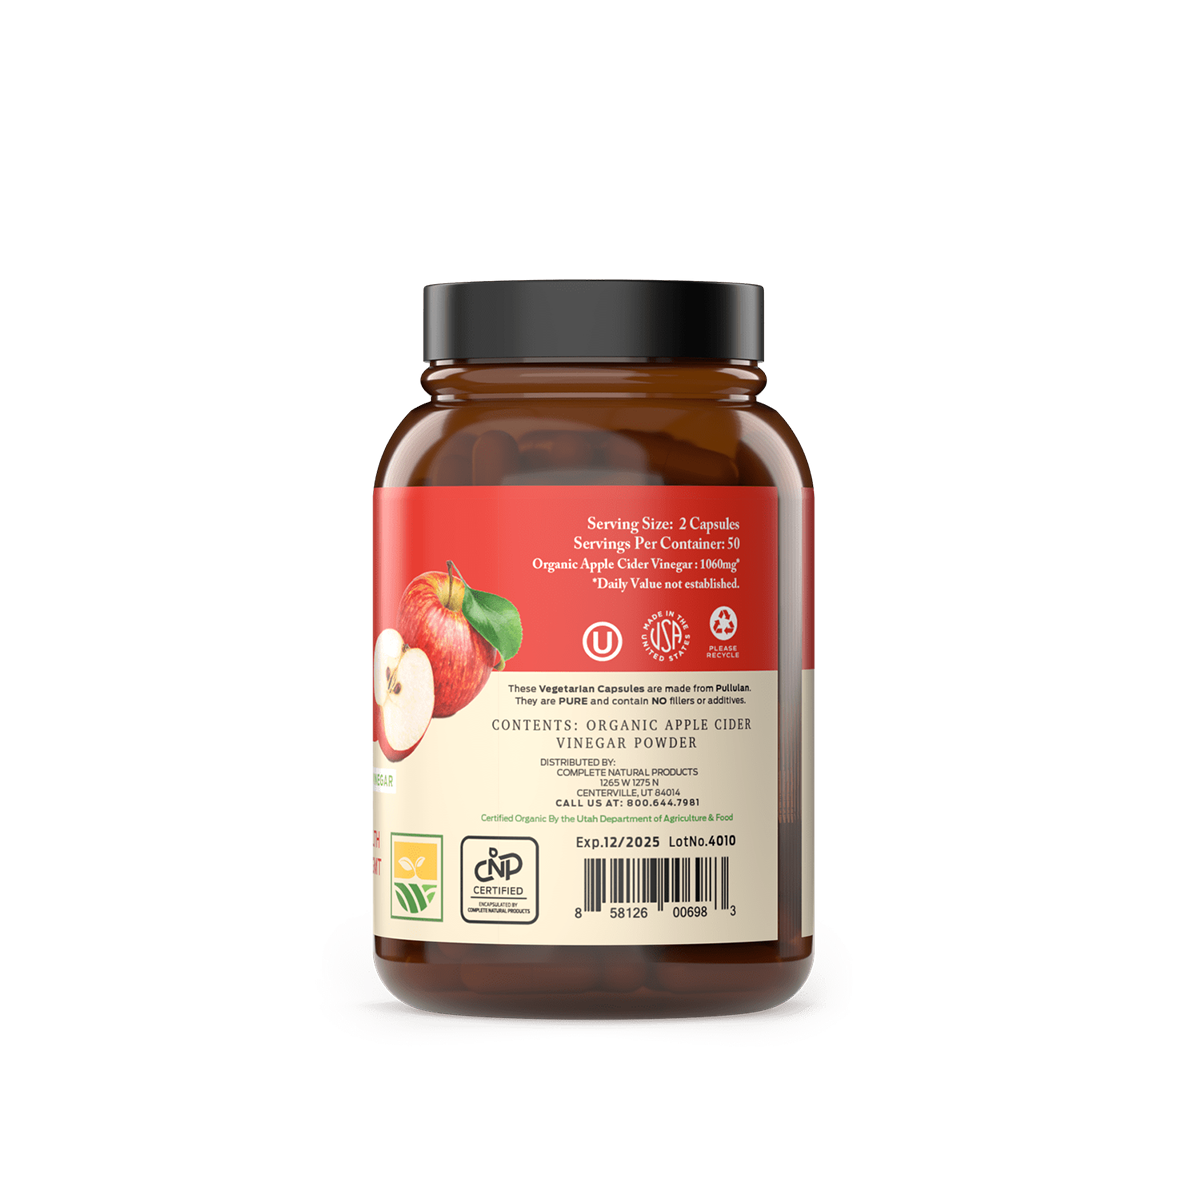 Cápsulas de vinagre de sidra de manzana orgánico